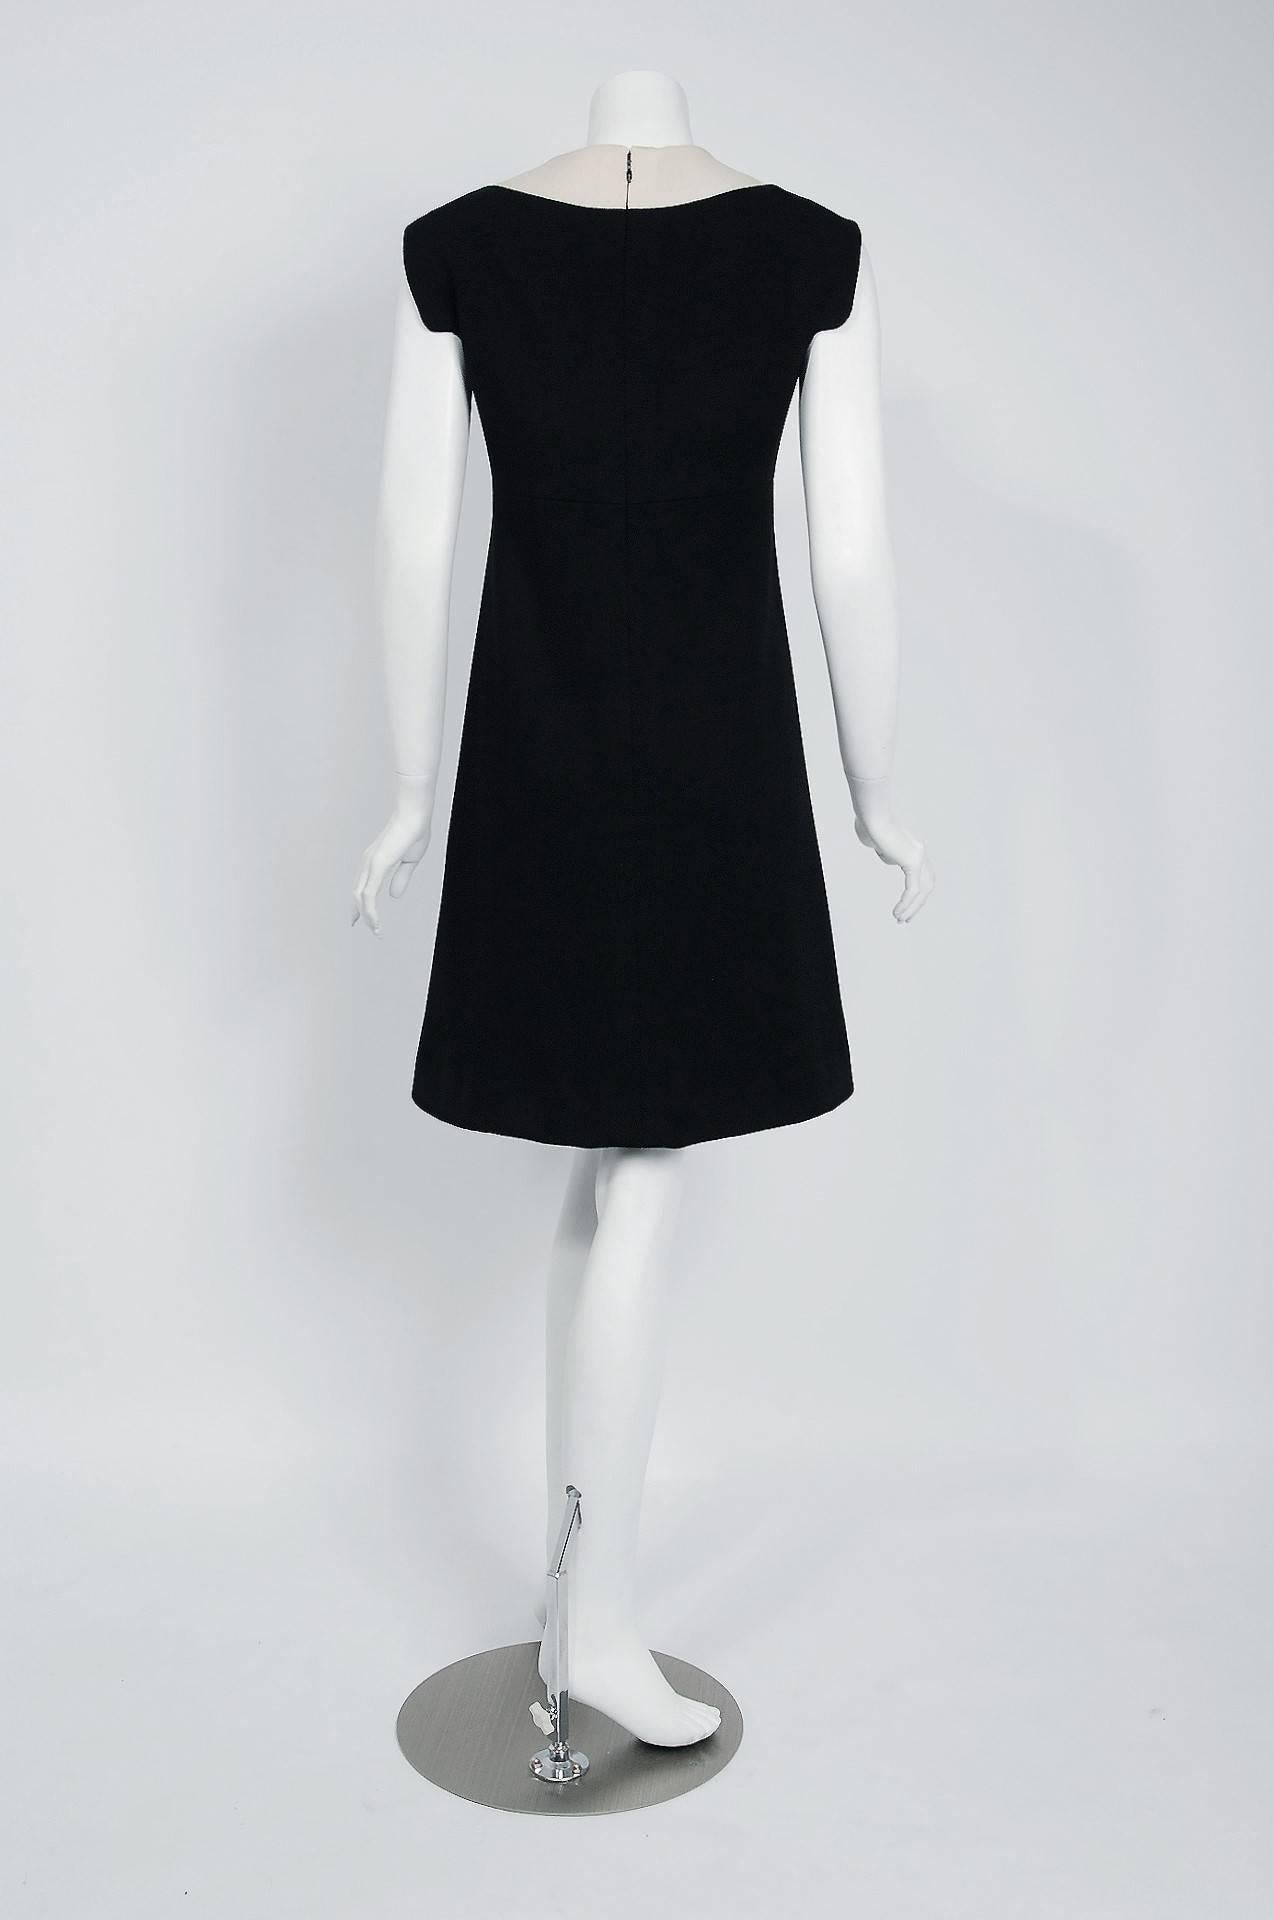 1968 Pierre Cardin Black & Ivory Block Color Wool Lace-Up Mod Space Age Dress  2